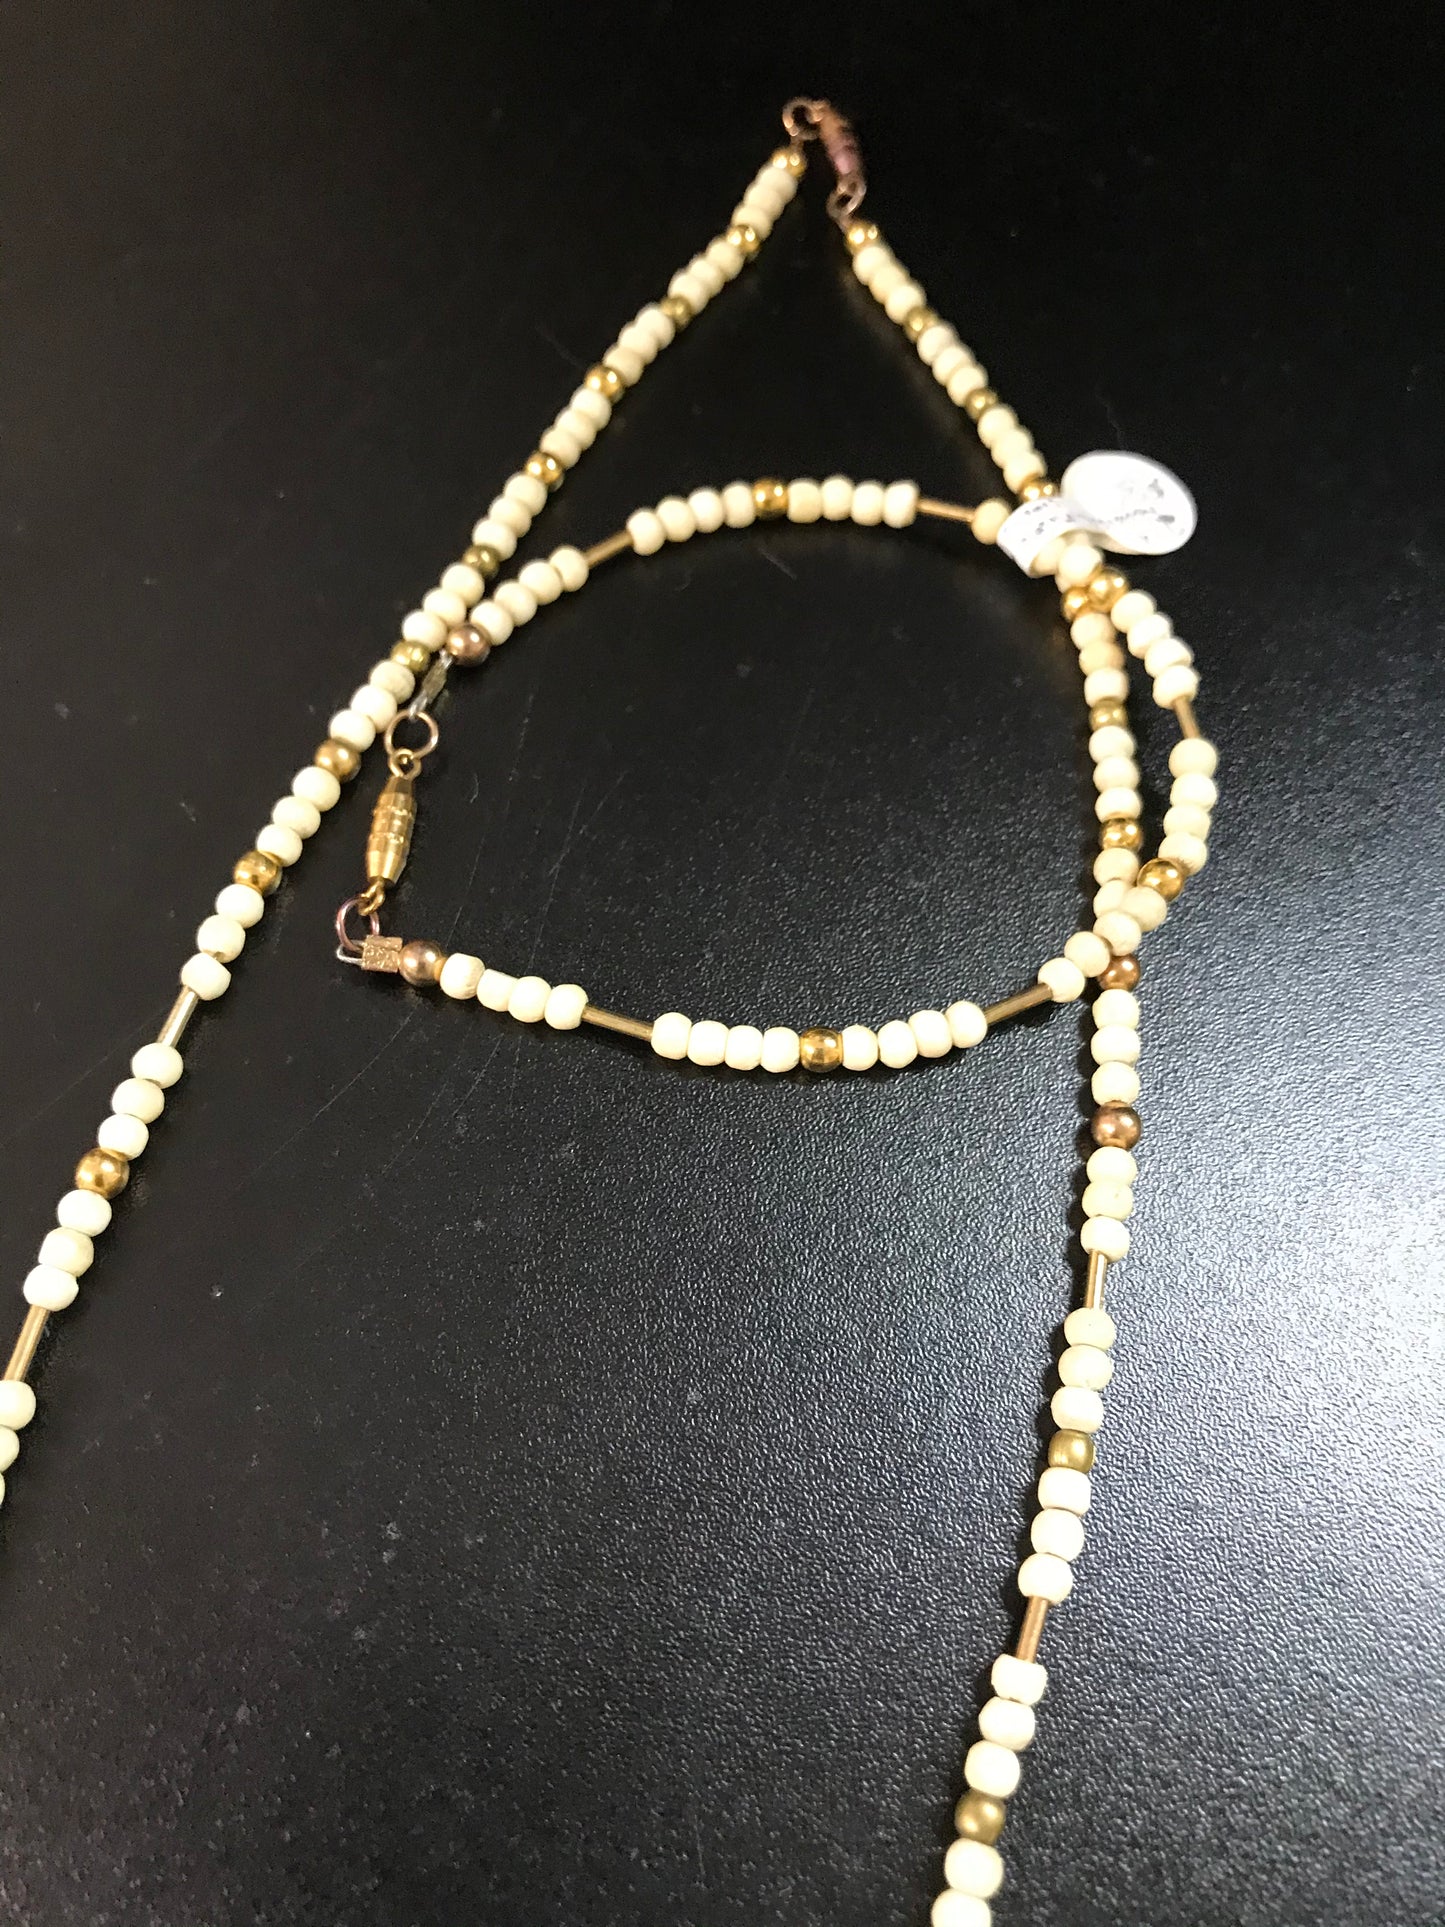 21" long Elk Bone Necklace and bracelet set with Owl Pendant